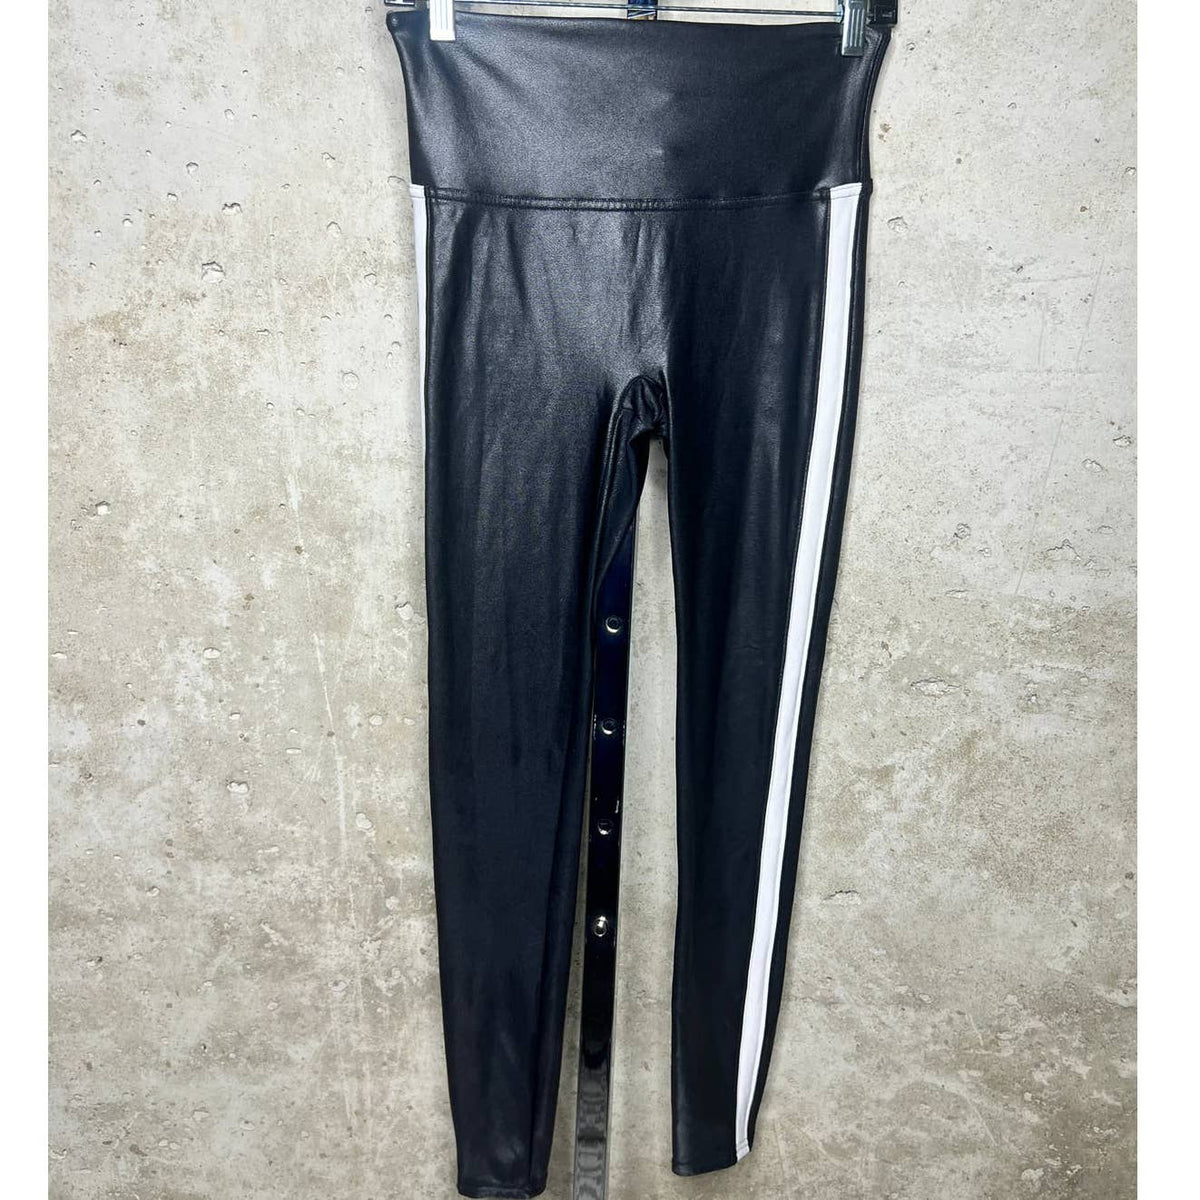 Spanx Faux Black Leather Side Stripe Leggings Sz.Medium